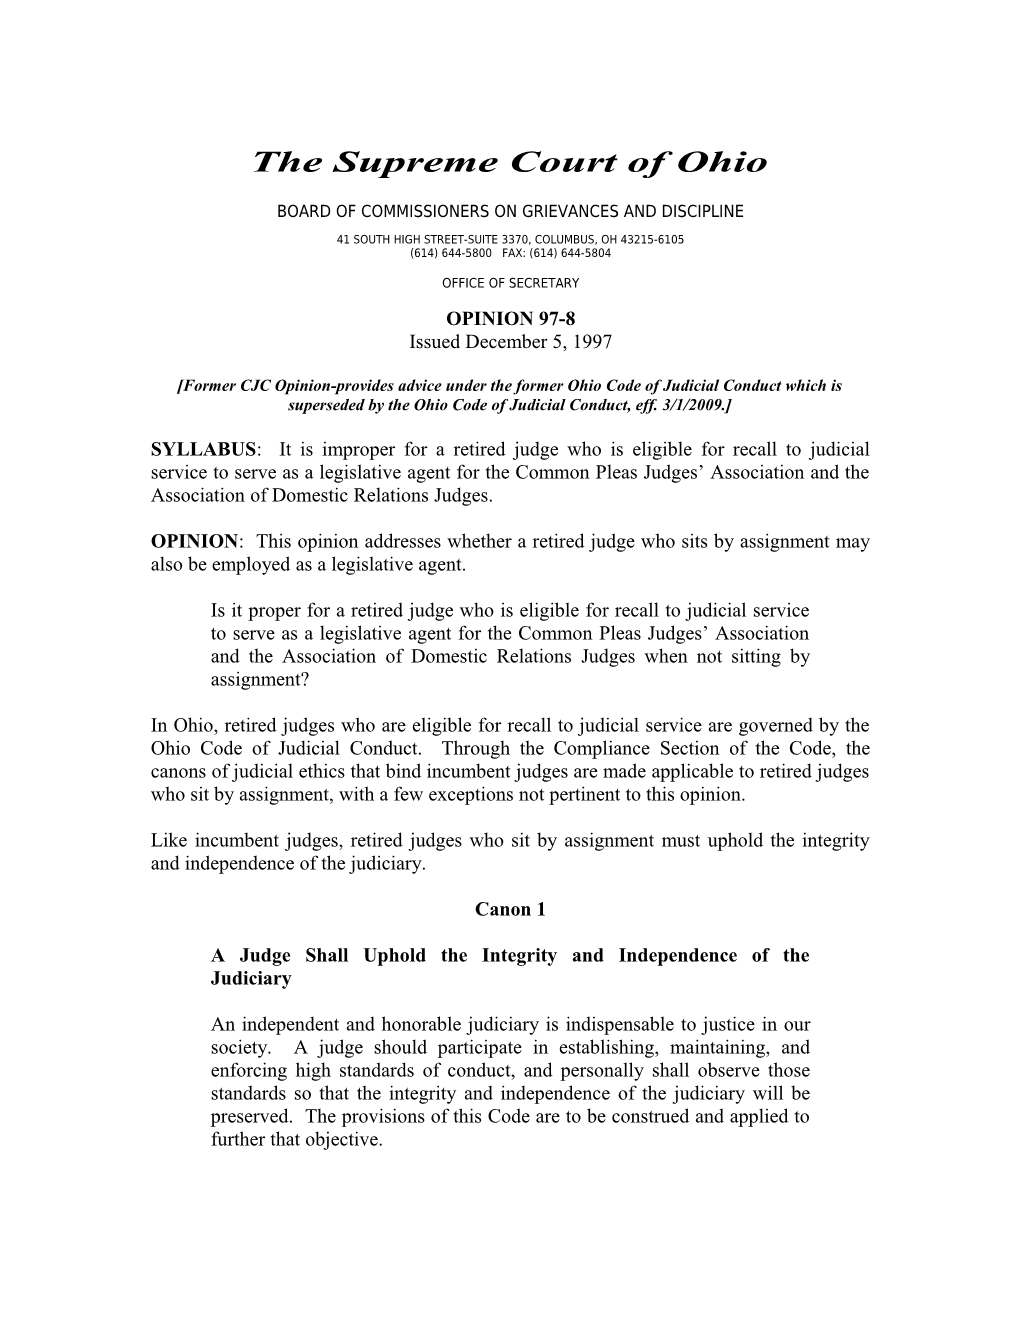 The Supreme Court of Ohio s21